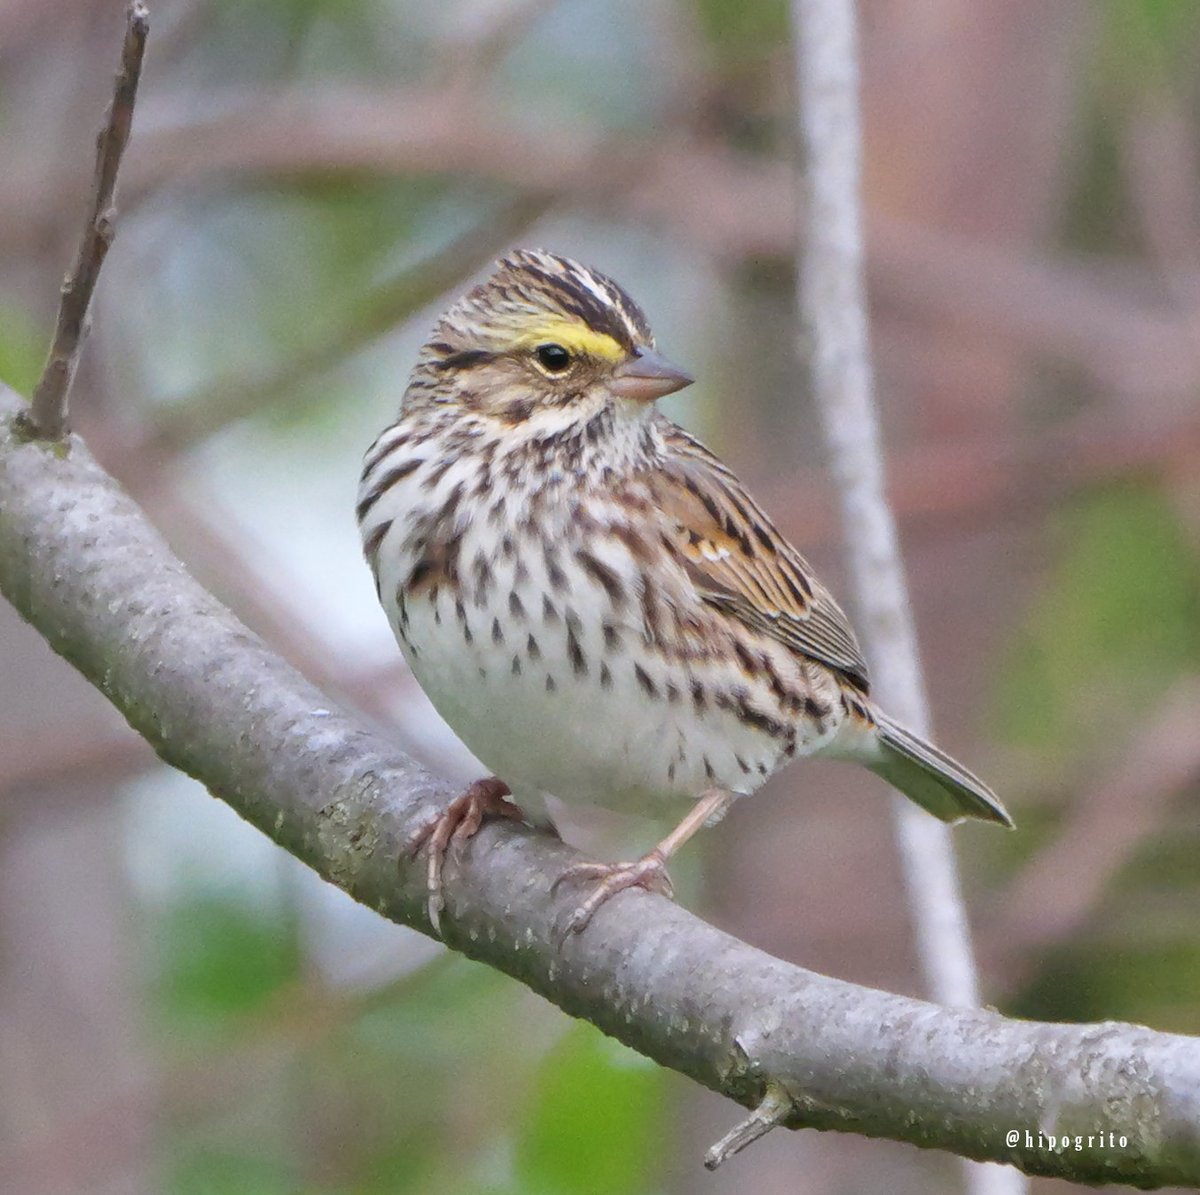 Savannah Sparrow
Long Island, NY

#birding #birdwatching